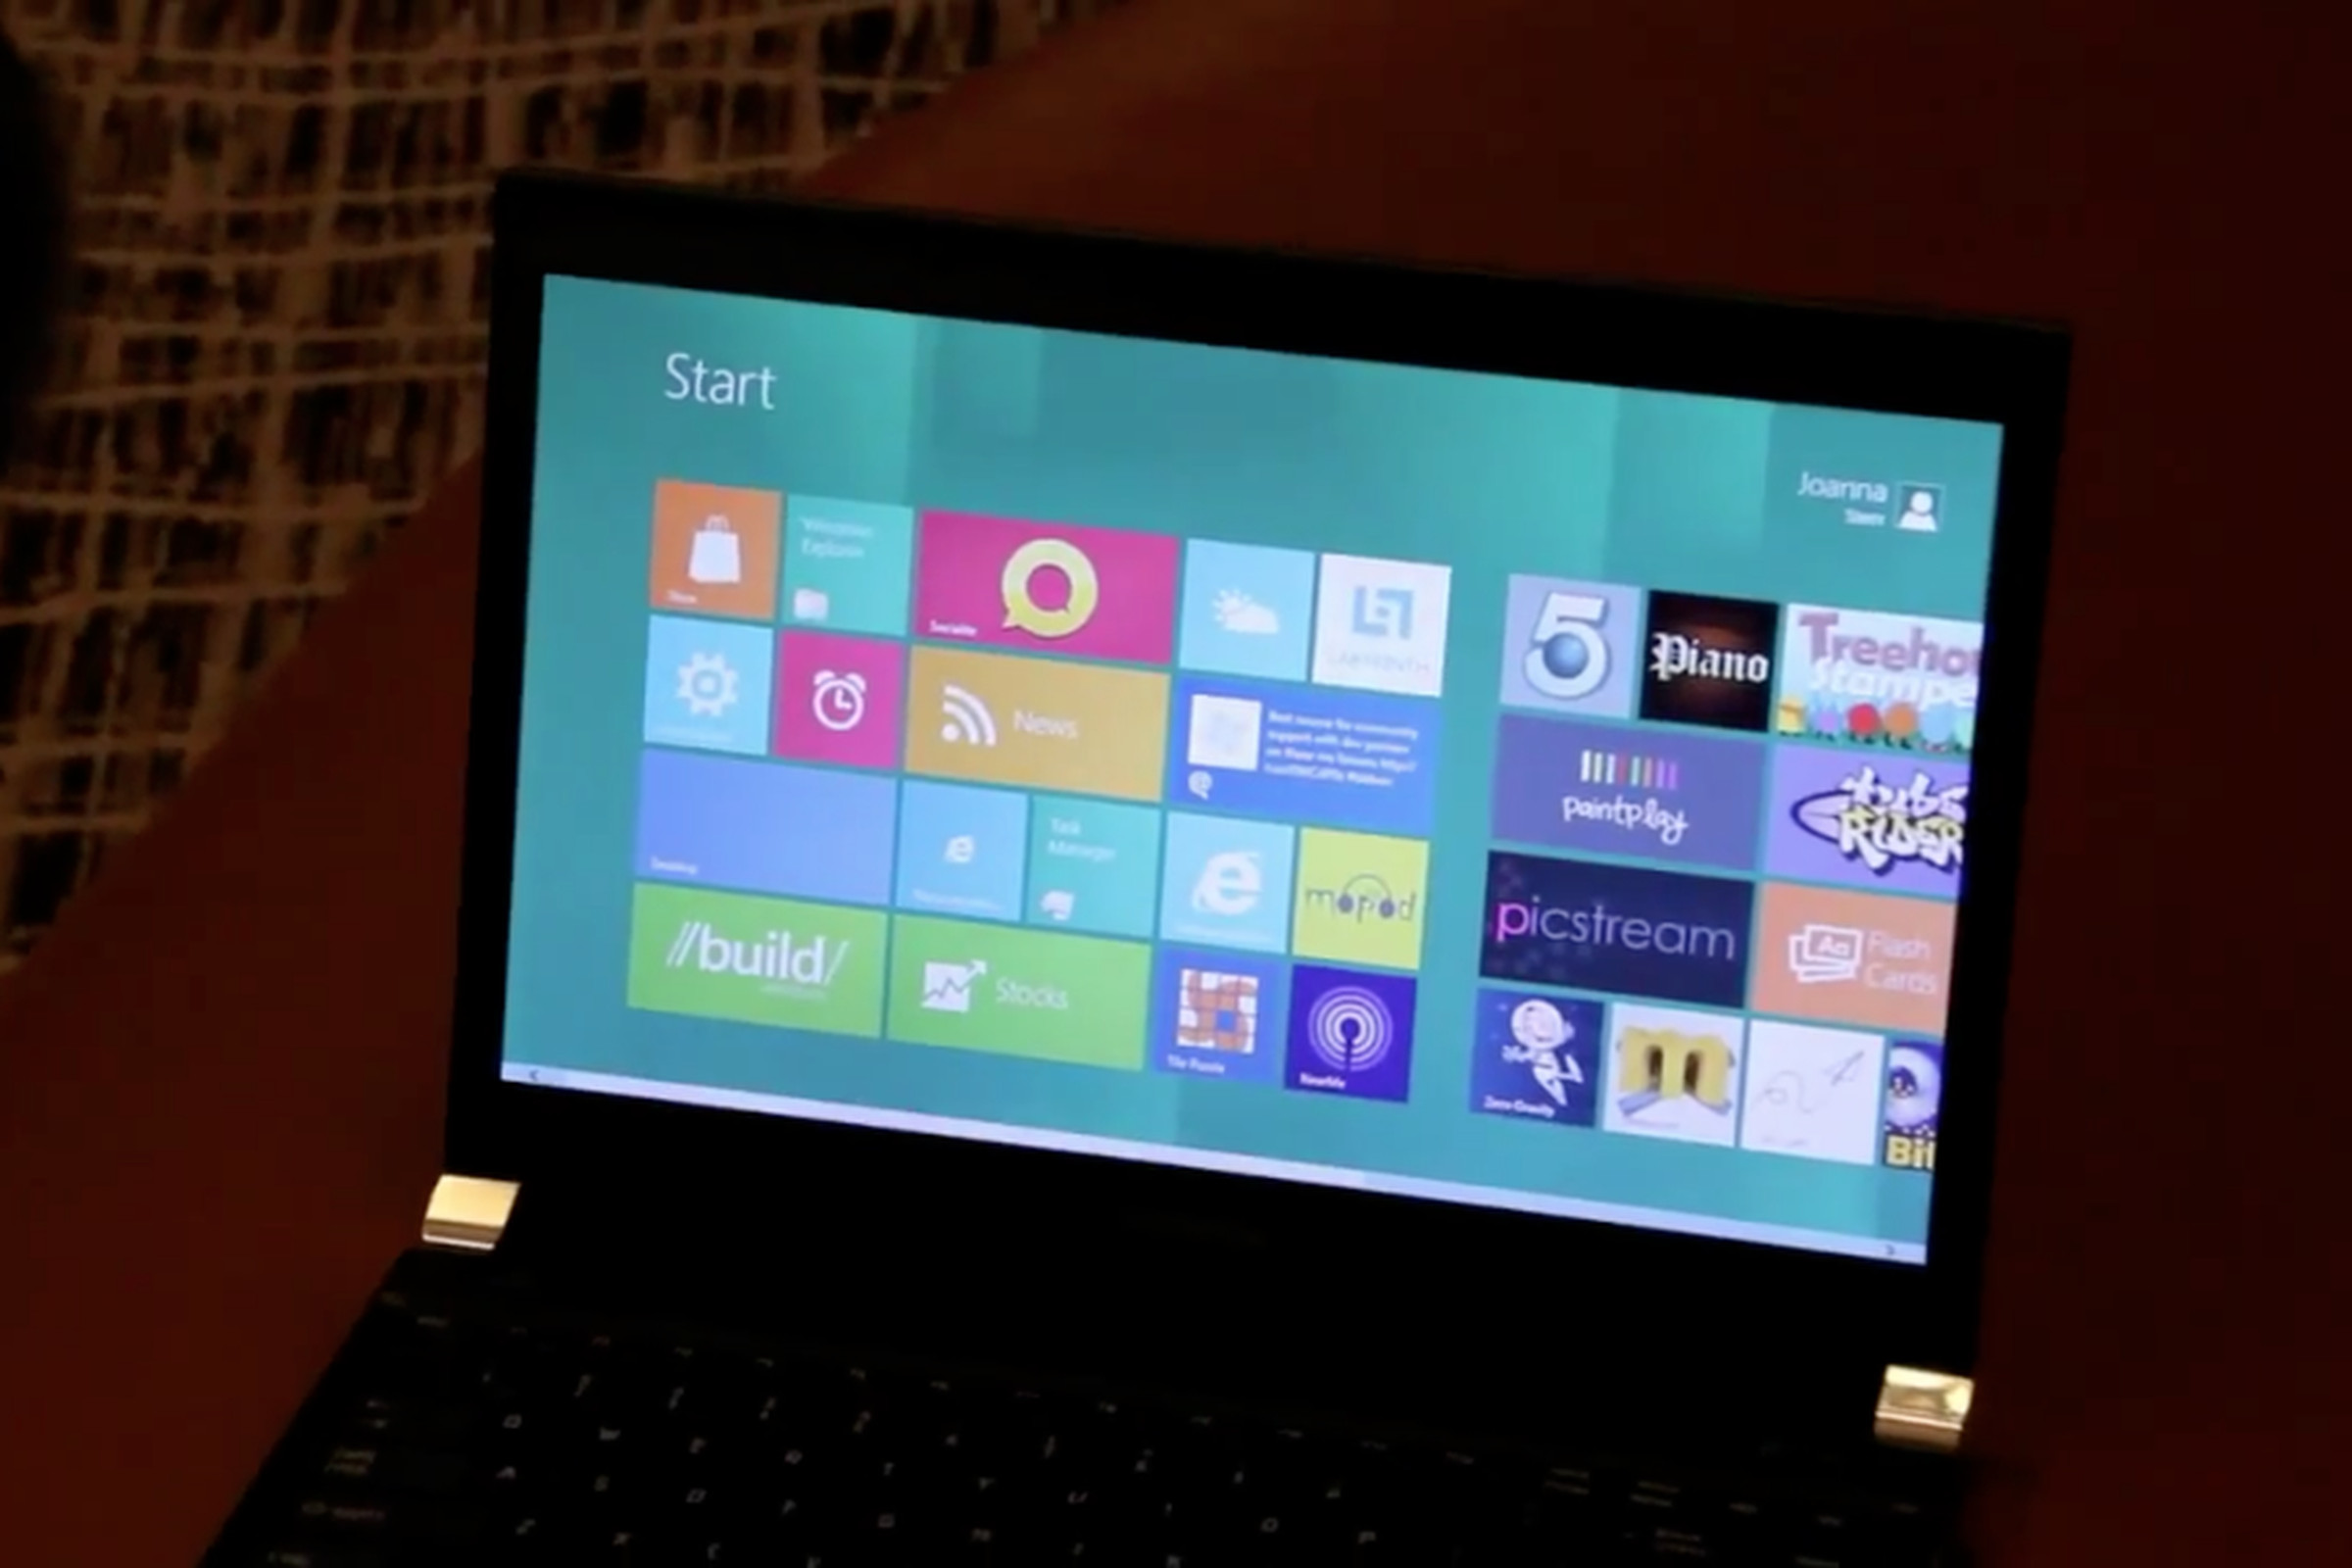 Windows 8 on a laptop